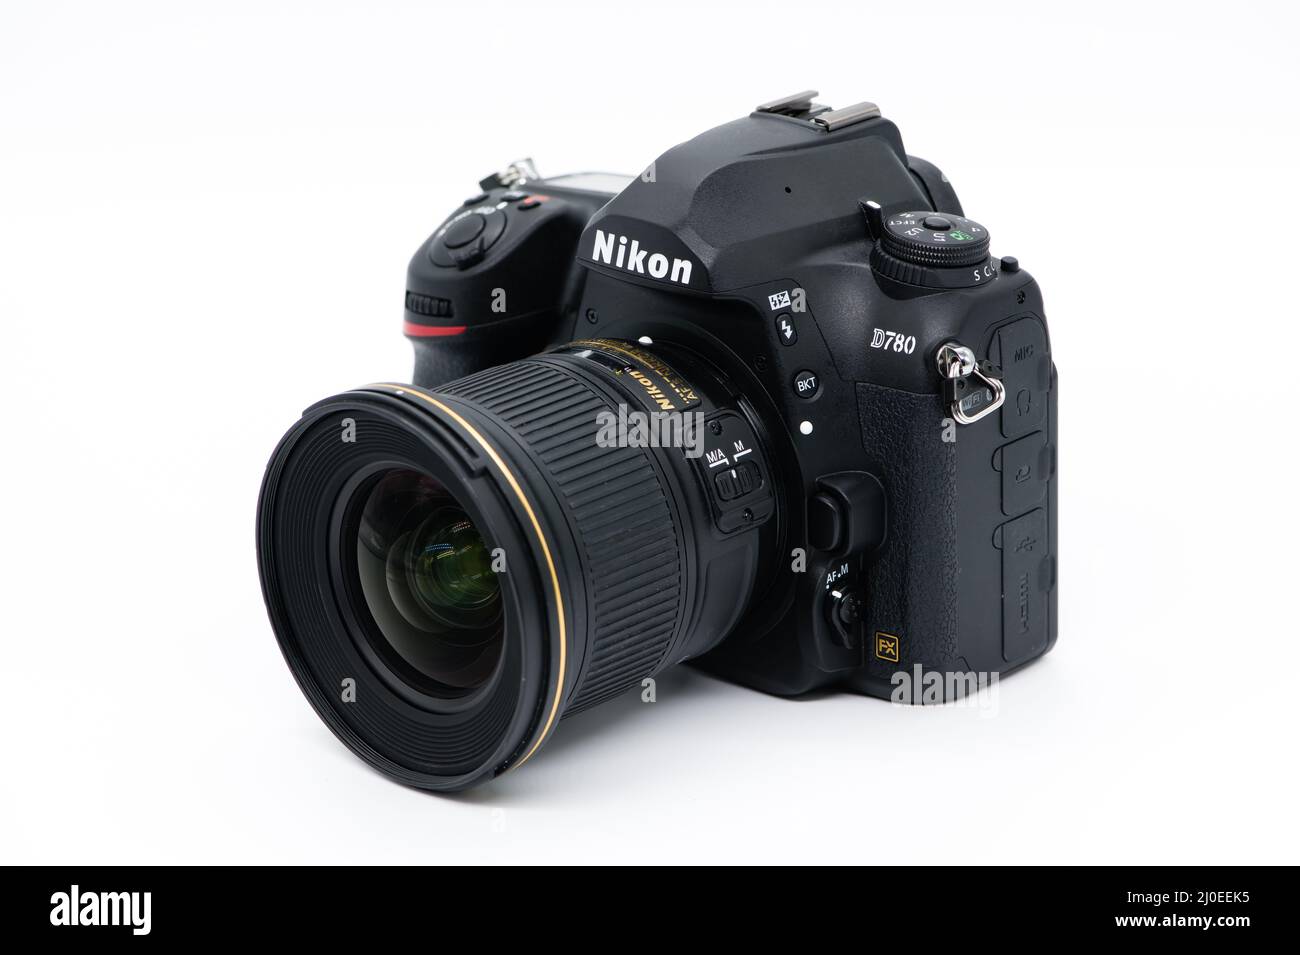 Puerto Vallarta, Jalisco Mexiko - März 17 2022: Die neueste digitale Spiegelreflexkamera Nikon Corporation, die Nikon D780. Stockfoto